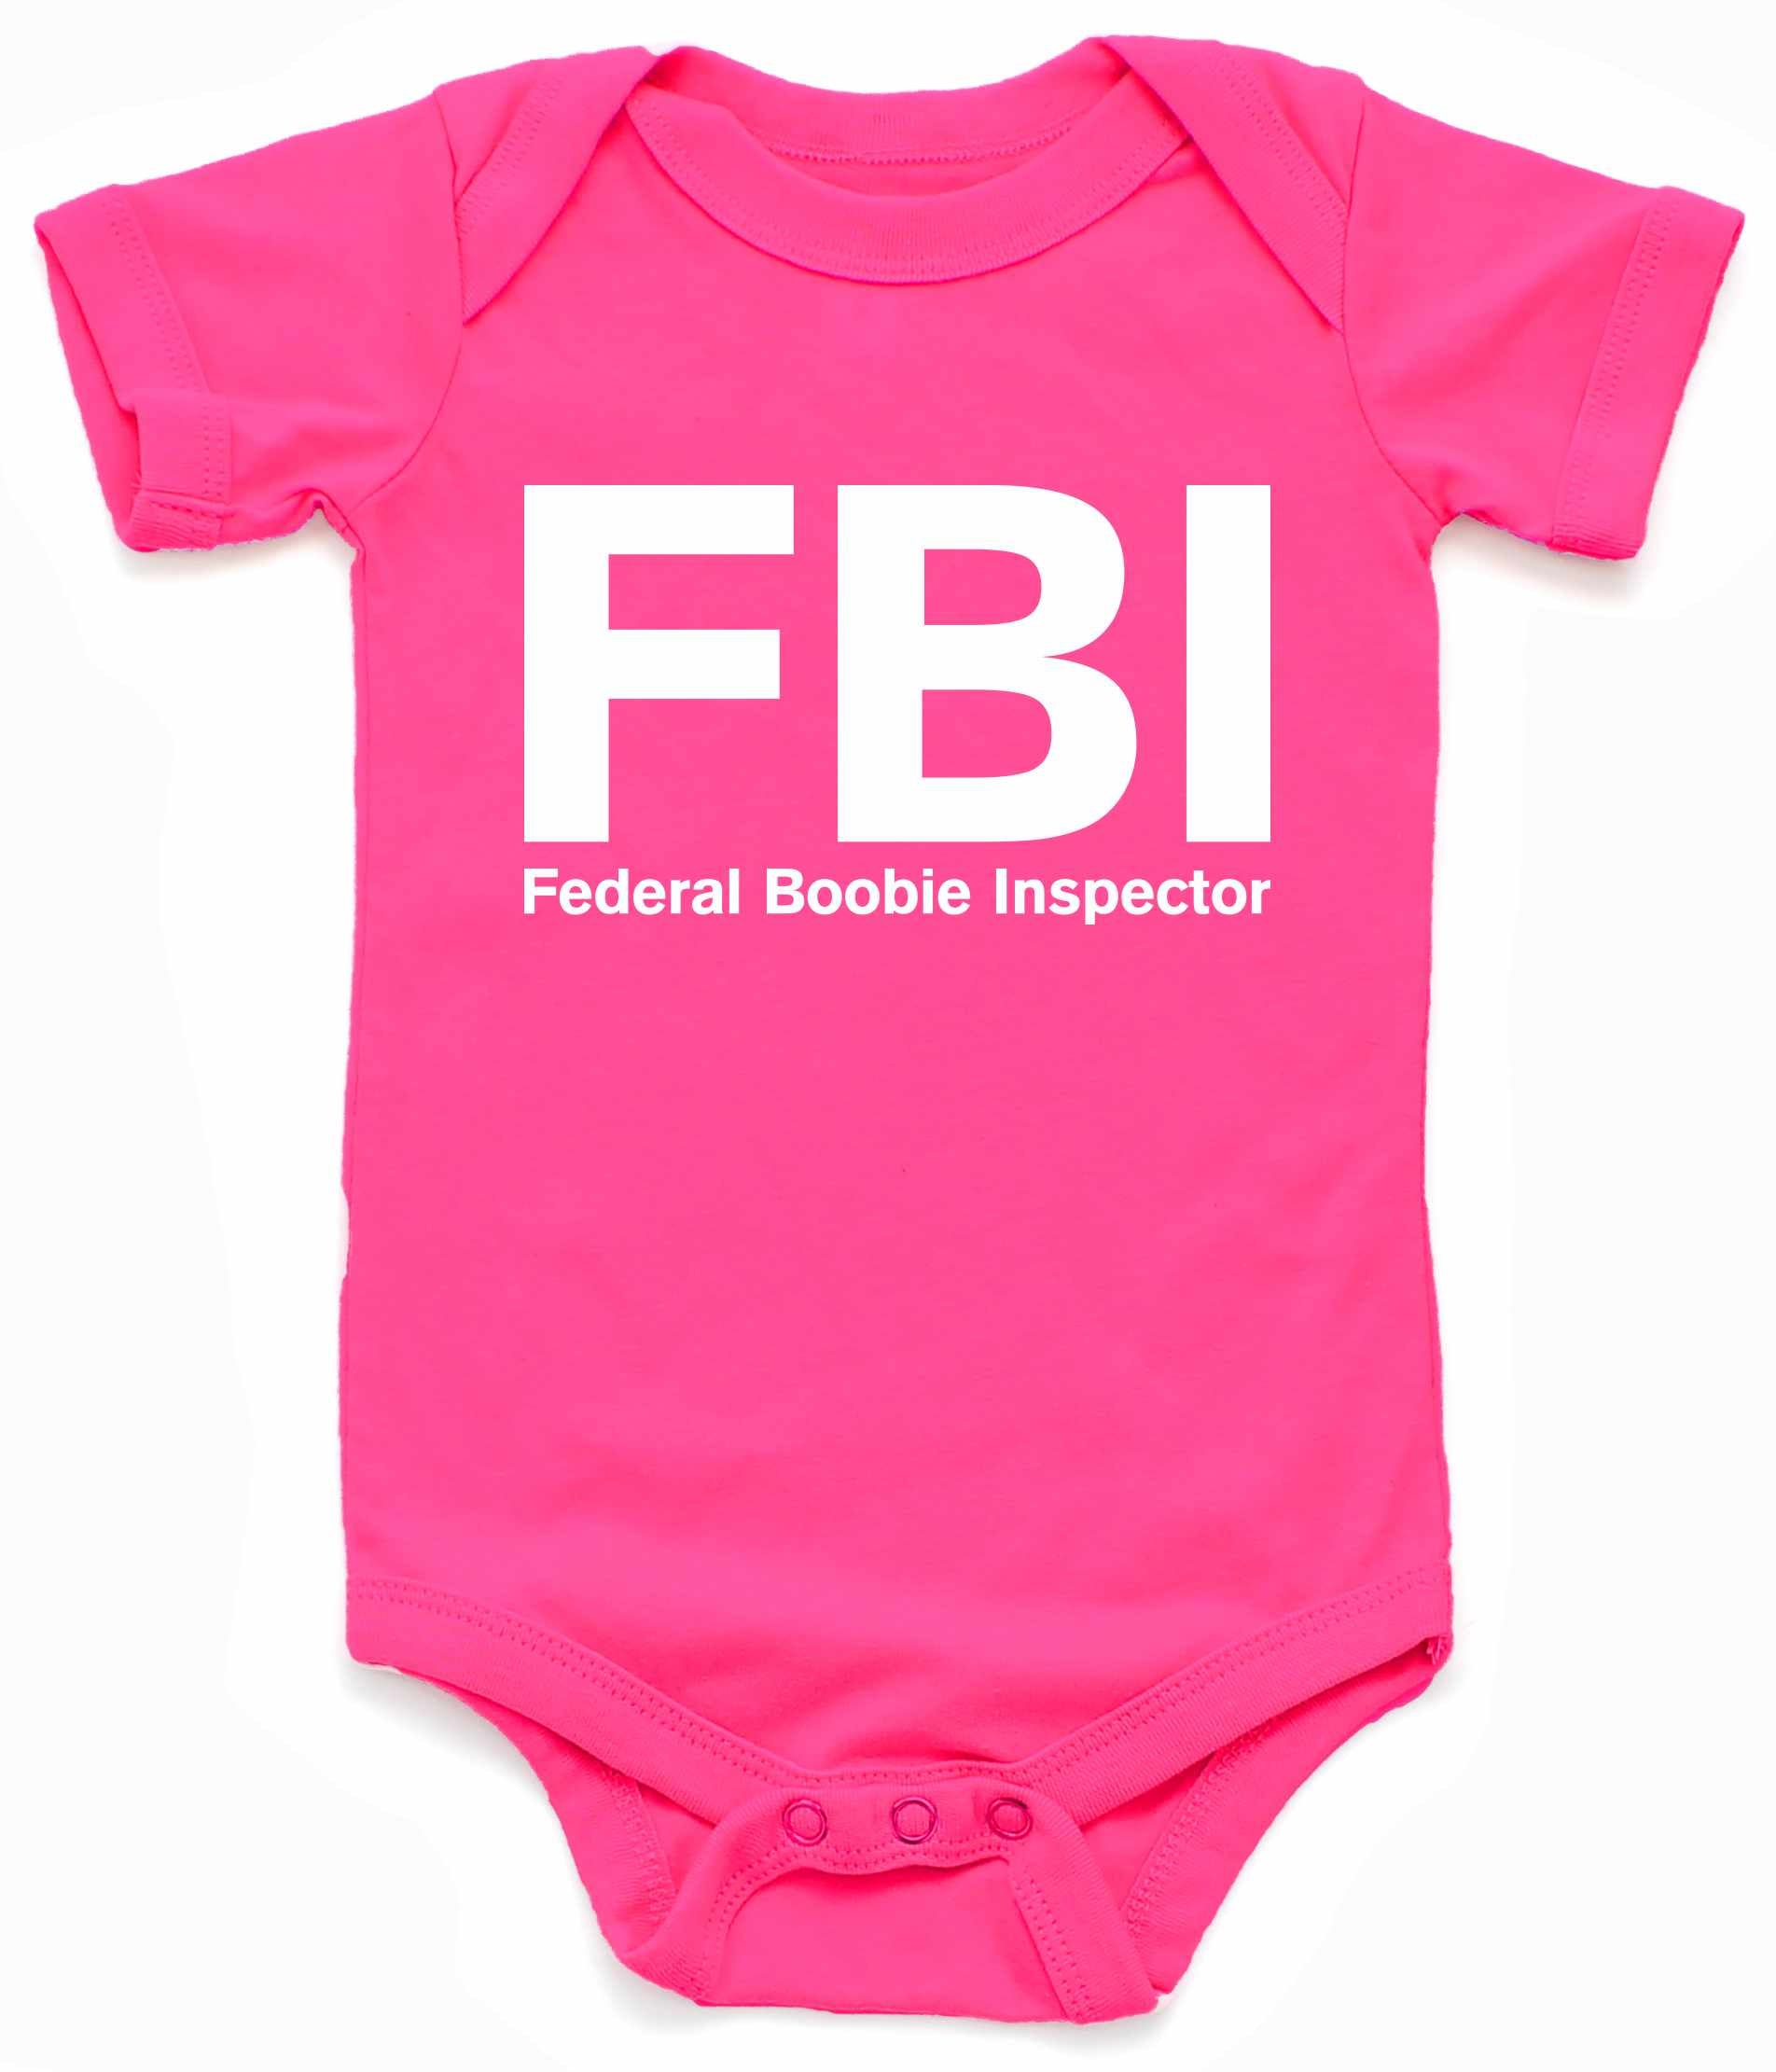 Federal Boobie Inspector Infant BodySuit - Hot Pink / NewBorn - Hot Pink / 6 Month - Hot Pink / 12 Month - Hot Pink / 18 Month - Hot Pink / 24 Month